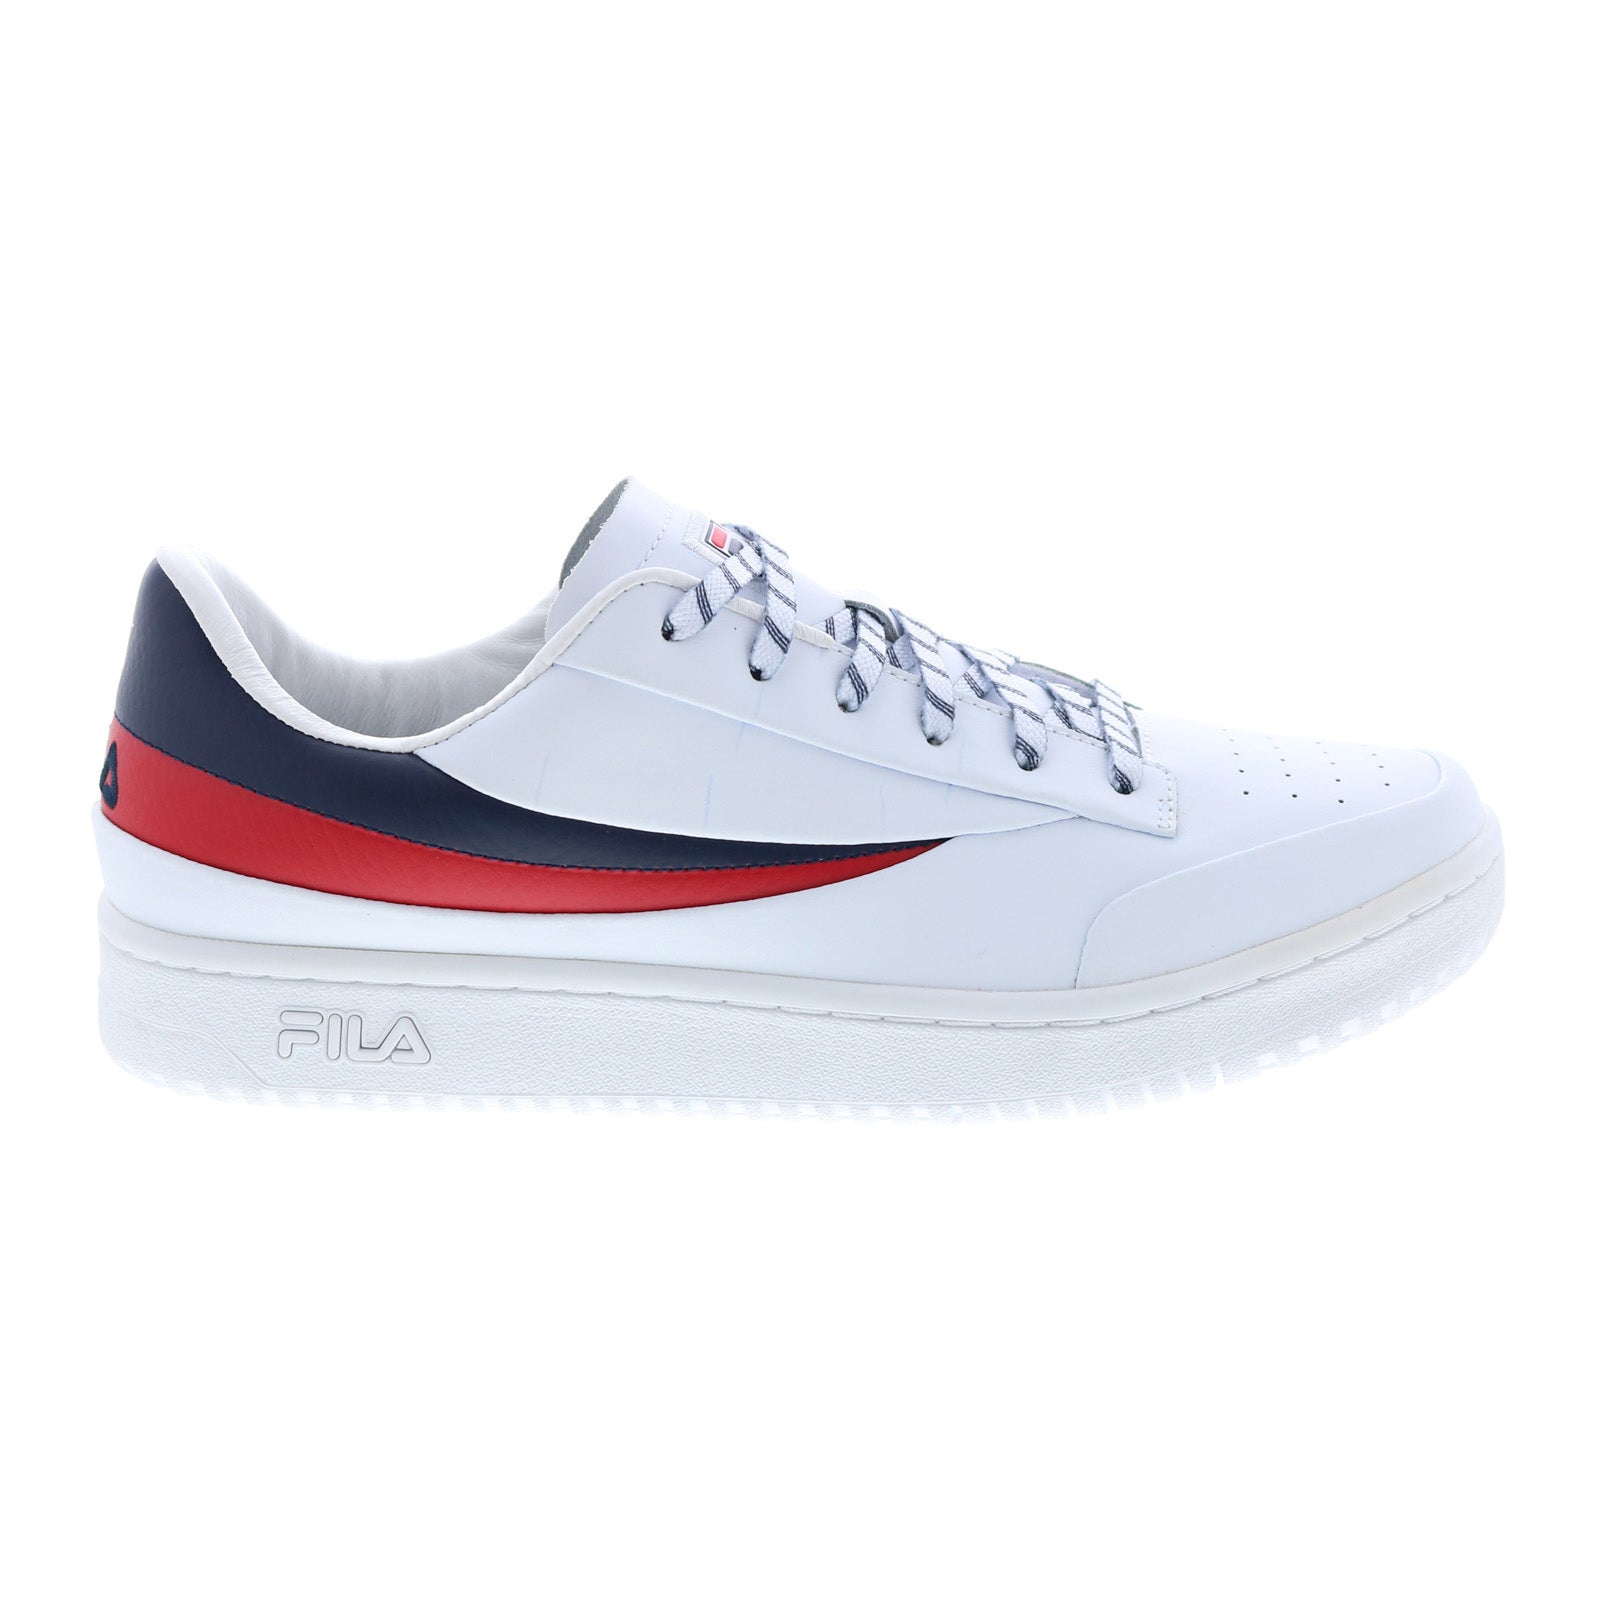 Fila OG Tennis LX X Brooks Brothers White Lifestyle Sneakers Shoe Ruze Shoes